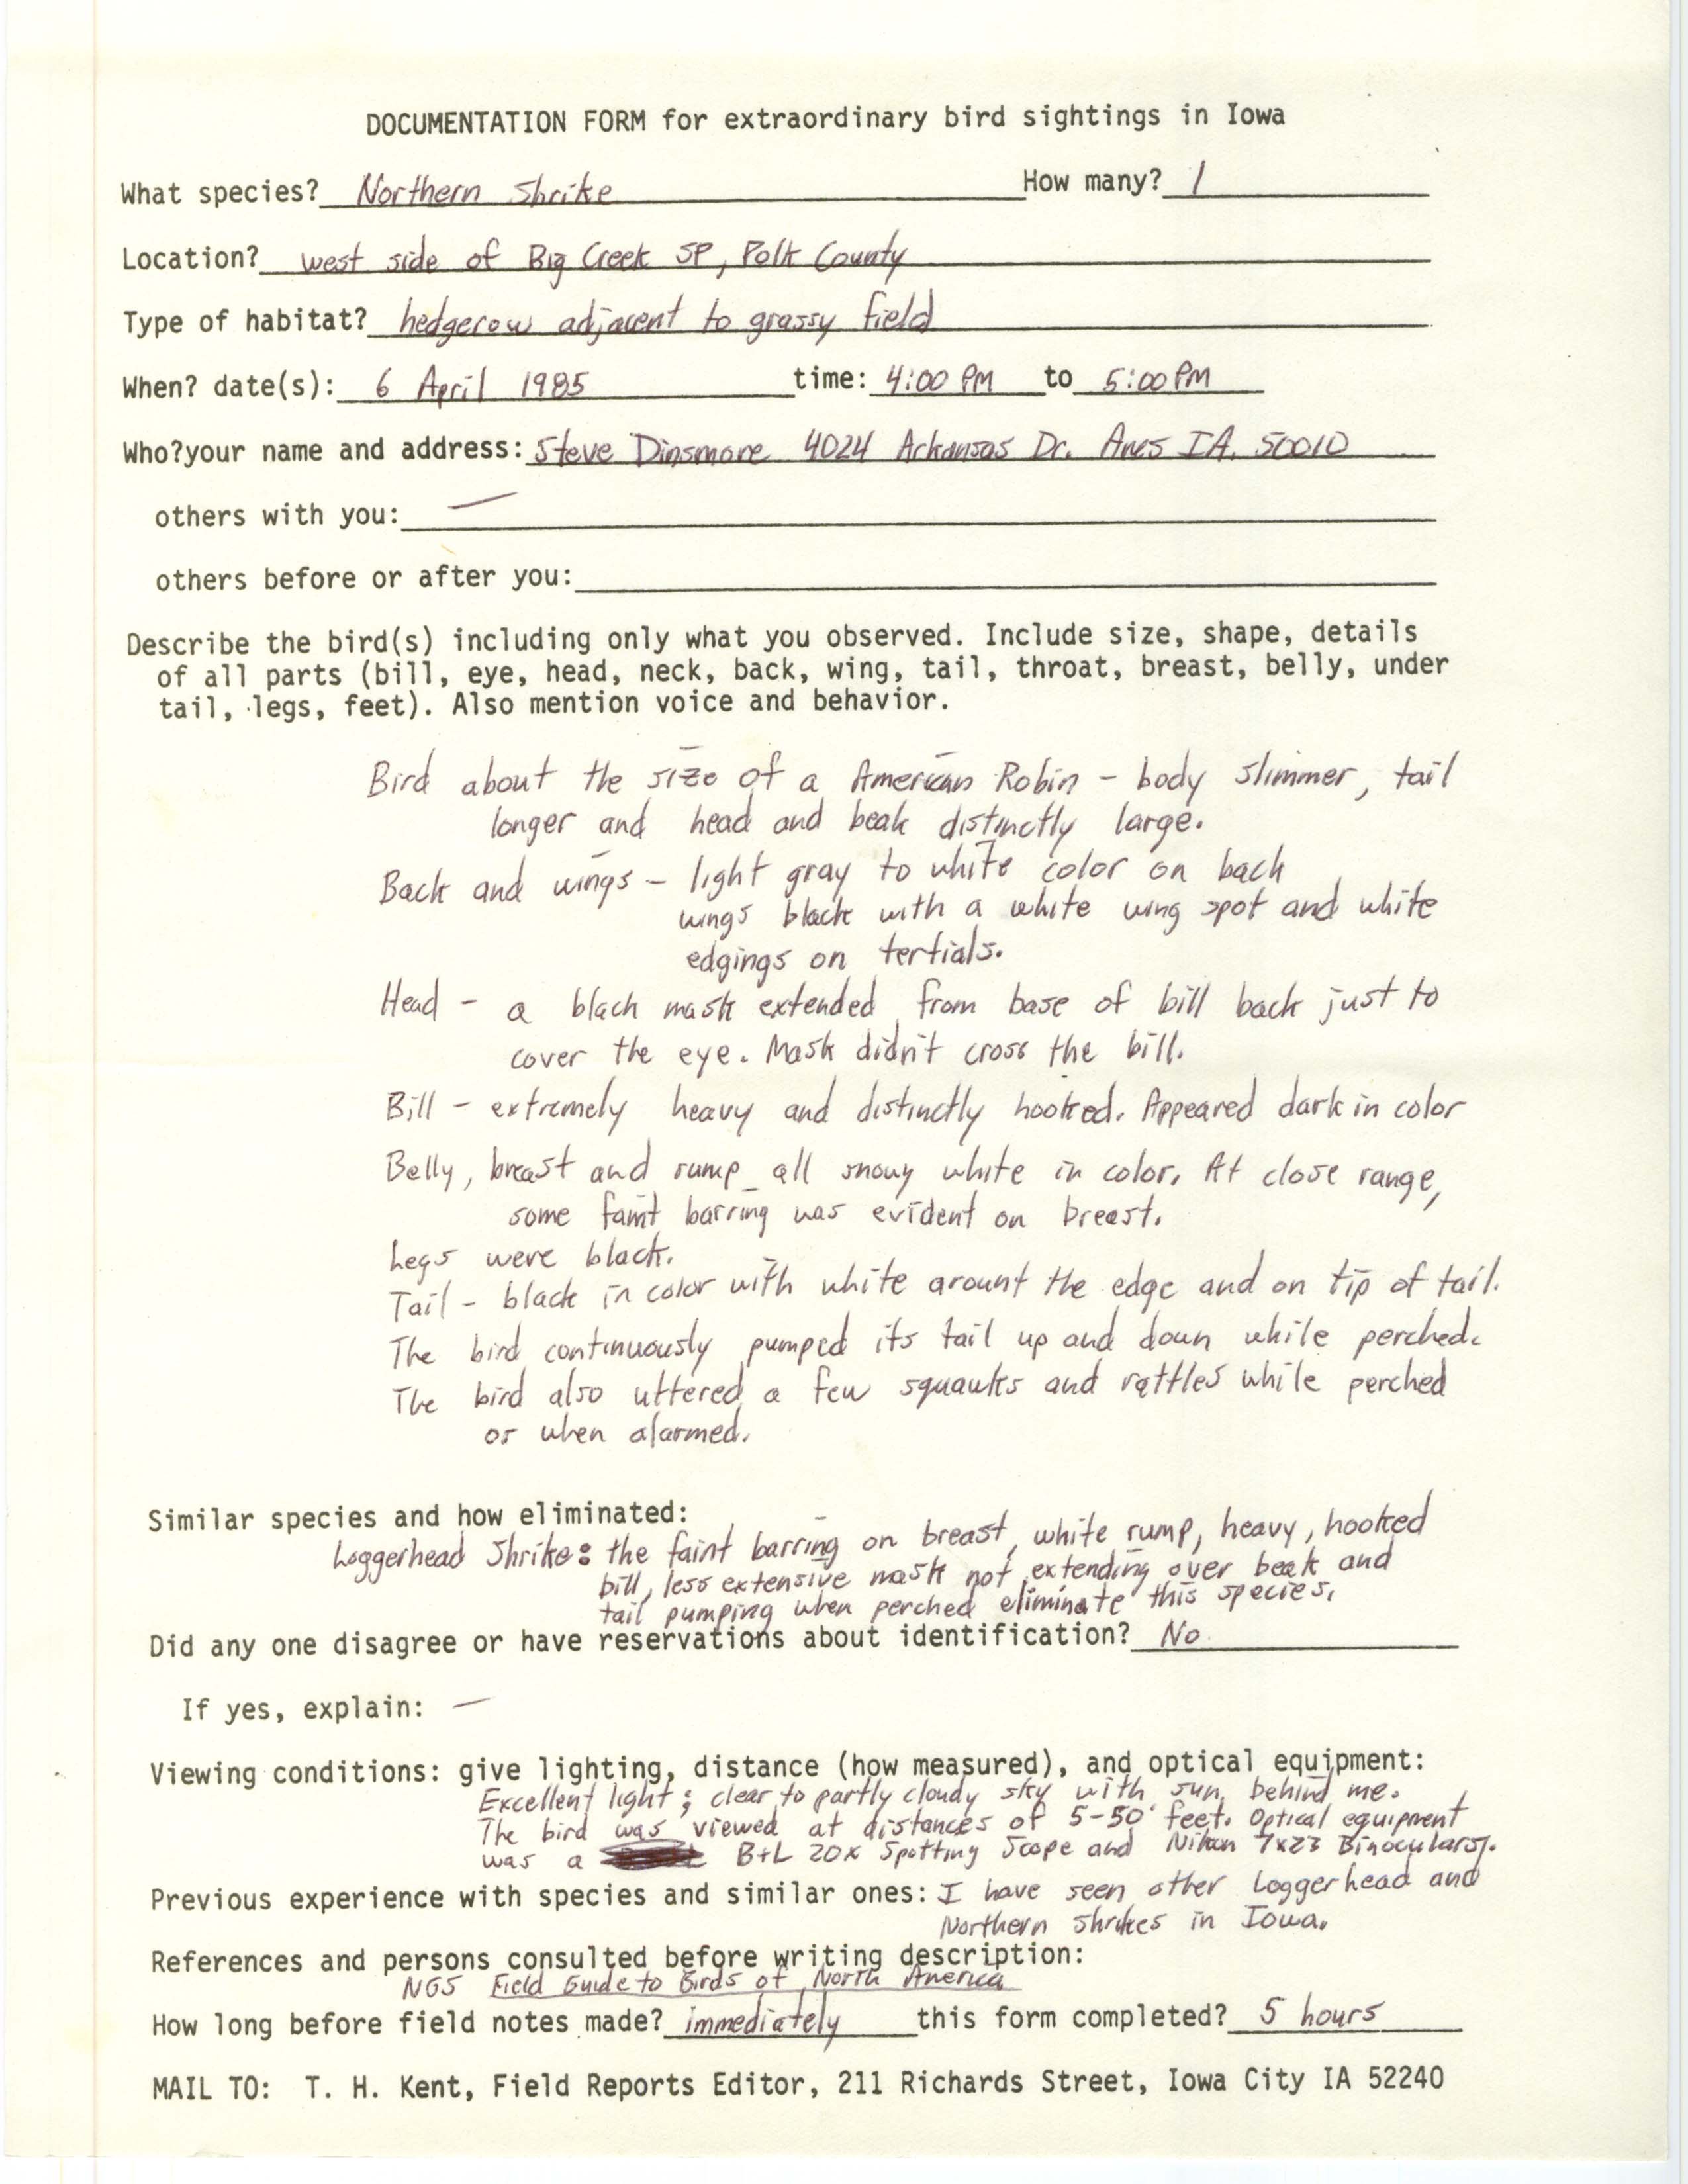 Rare bird documentation form for Northern Shrike at Big Creek State Park, 1985